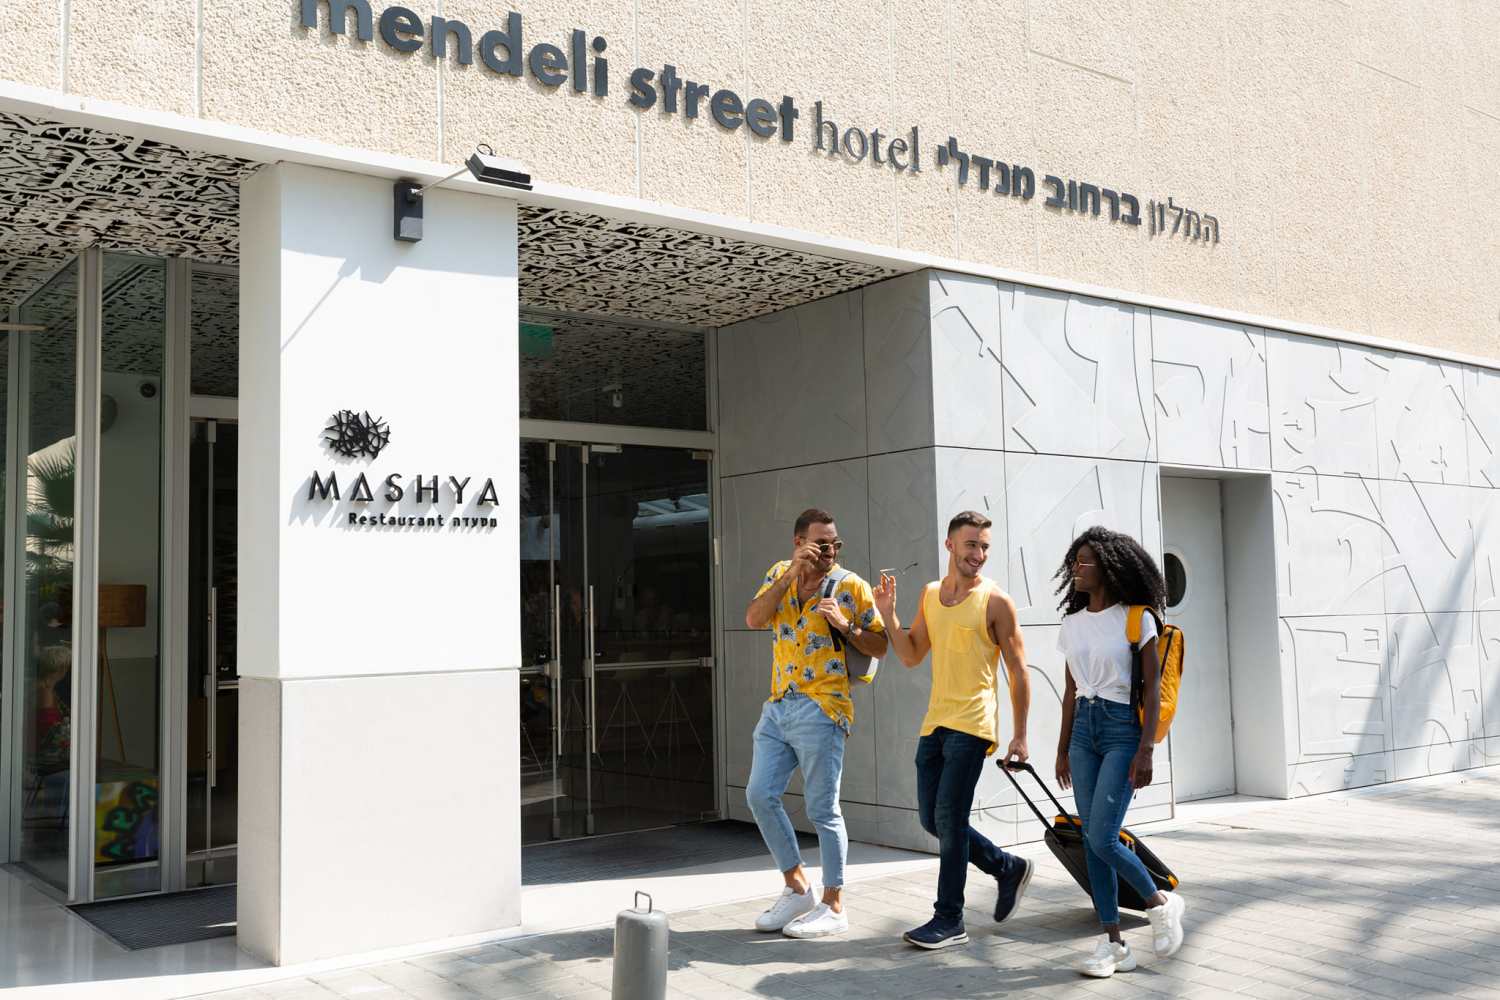 Mendeli Street Hotel Tel Aviv - Israel